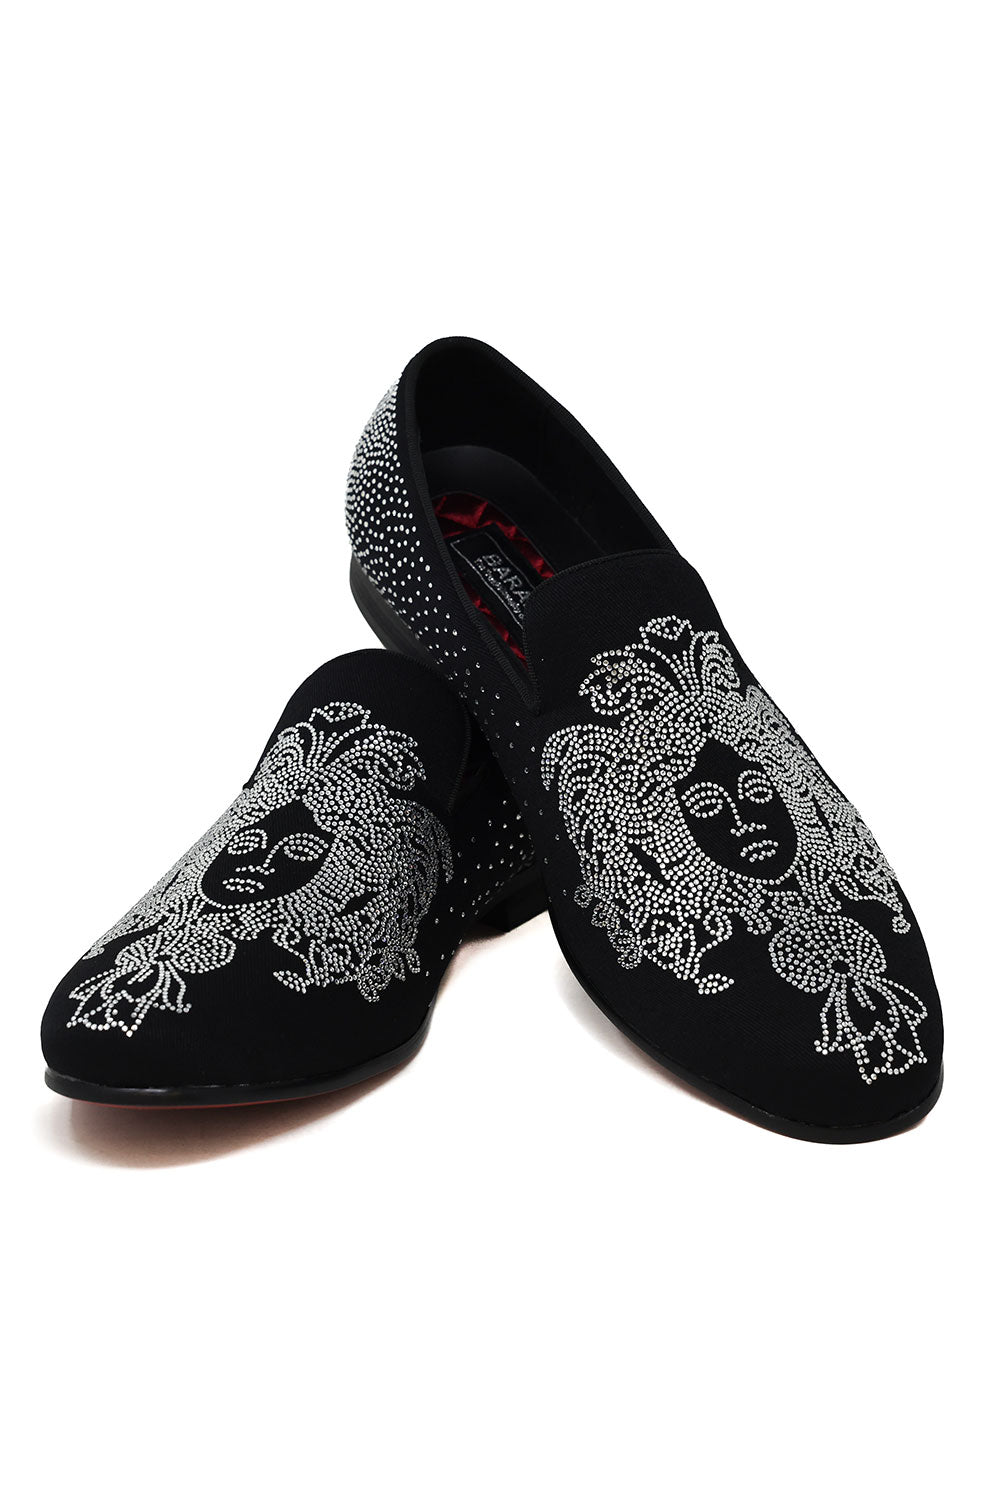 BARABAS Men's Medusa Rhinestone Jewels Slip On Dress Shoes 2SHR12 Black